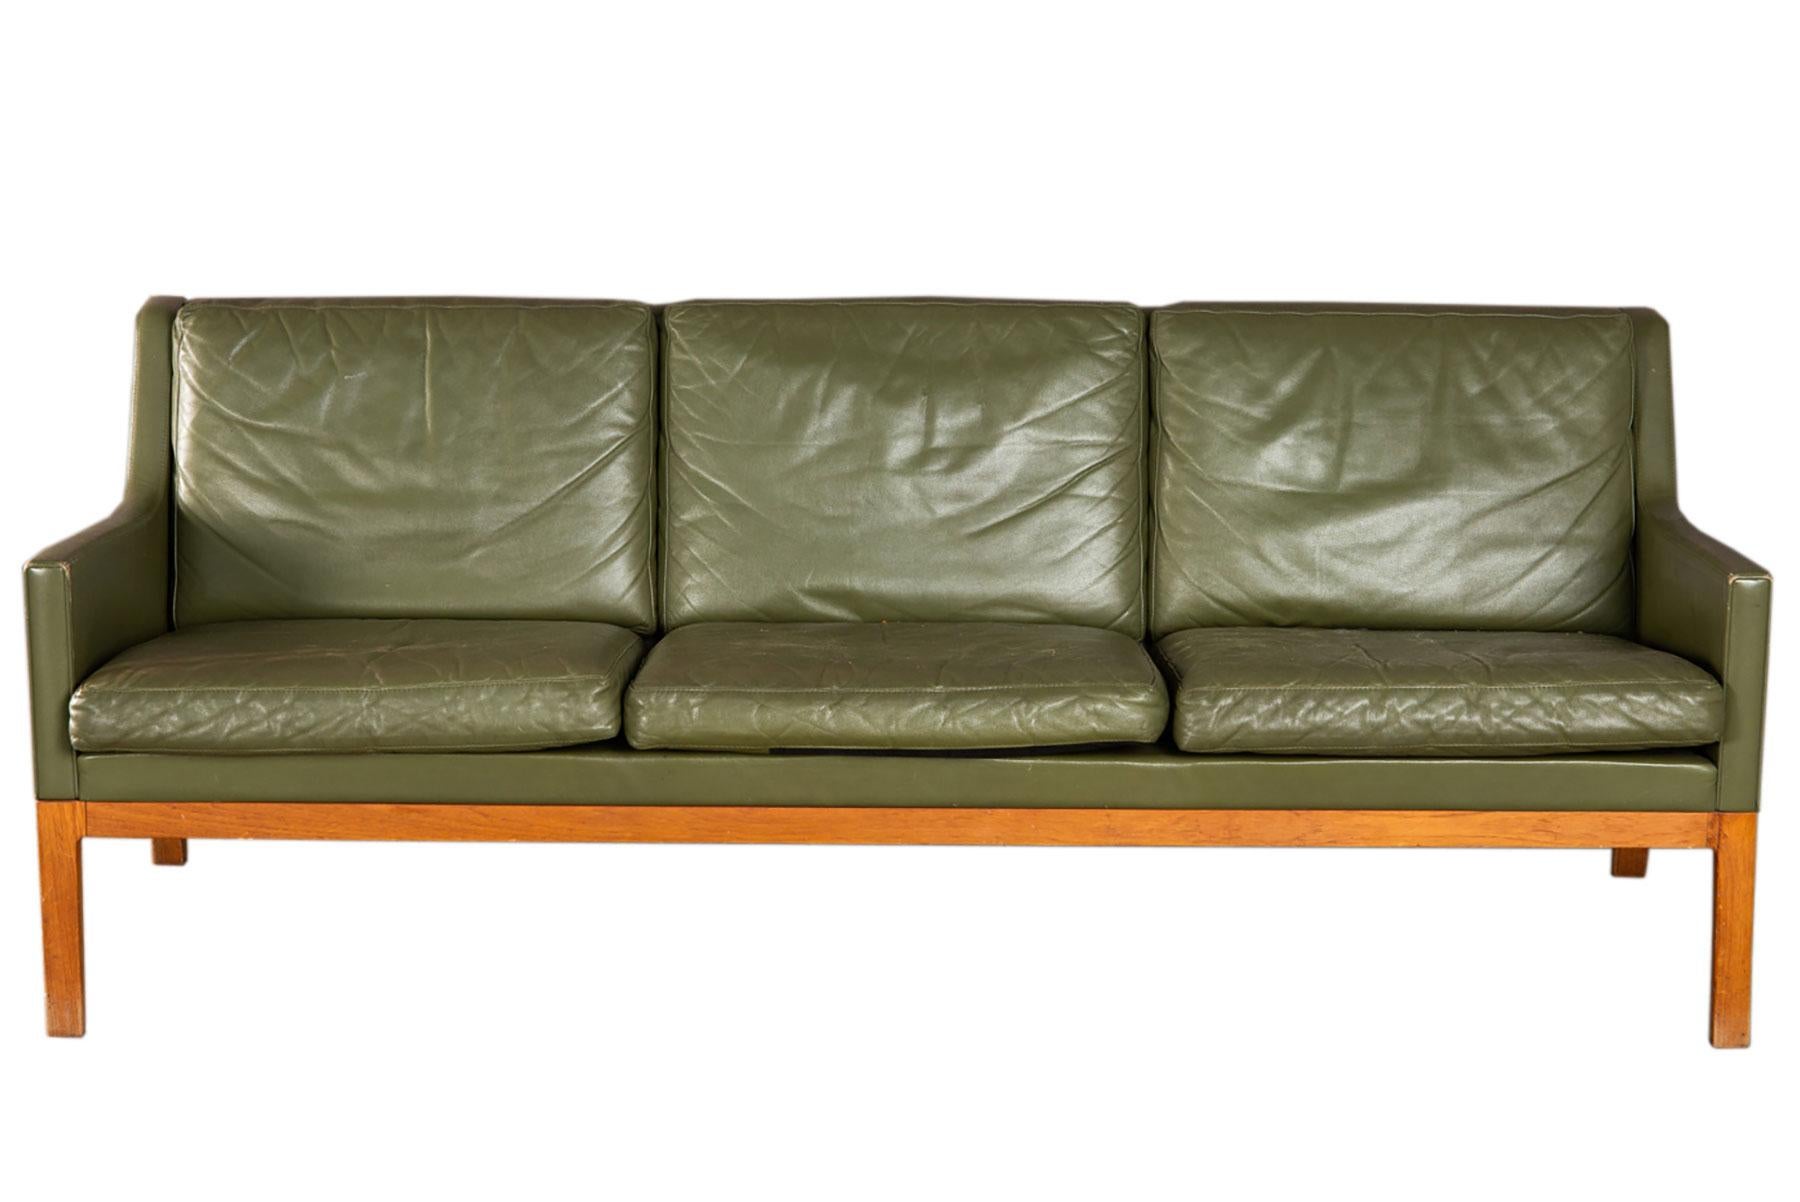 Danish Kai Lyngfeldt Larsen Three Seat Sofa in Teak and Original Green Leather